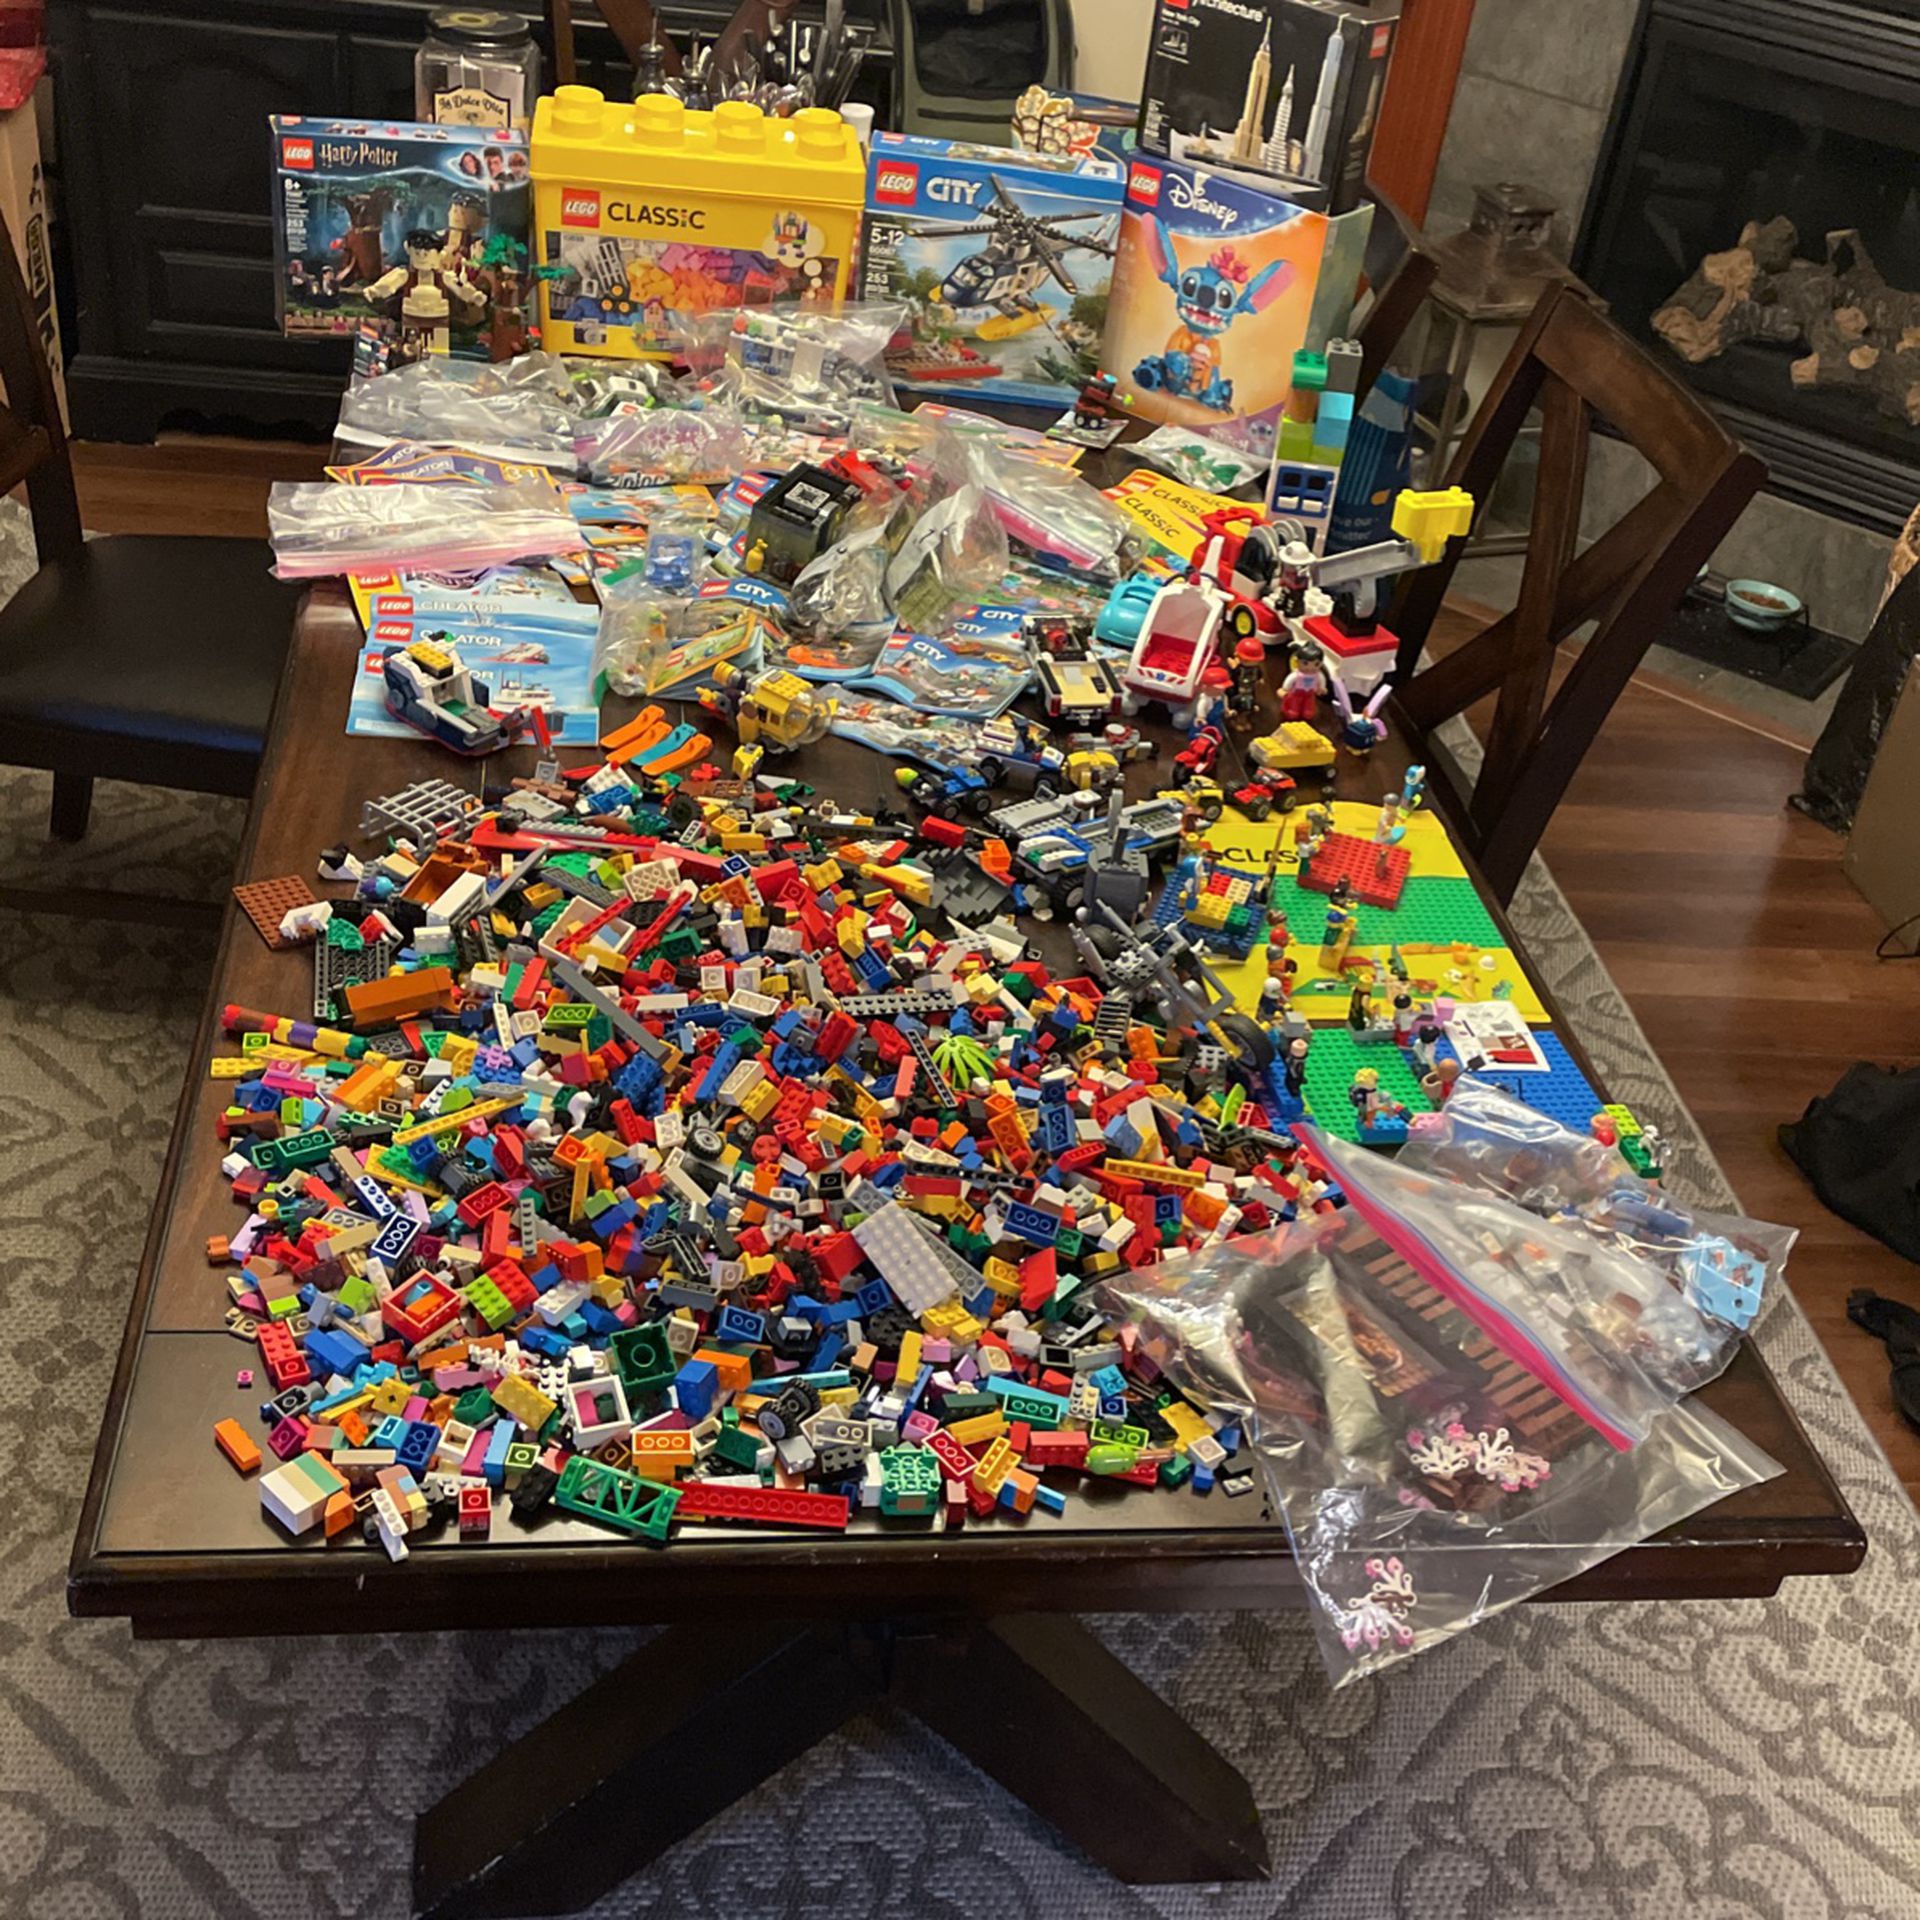 LEGO LEGO And More LEGO 30lbs